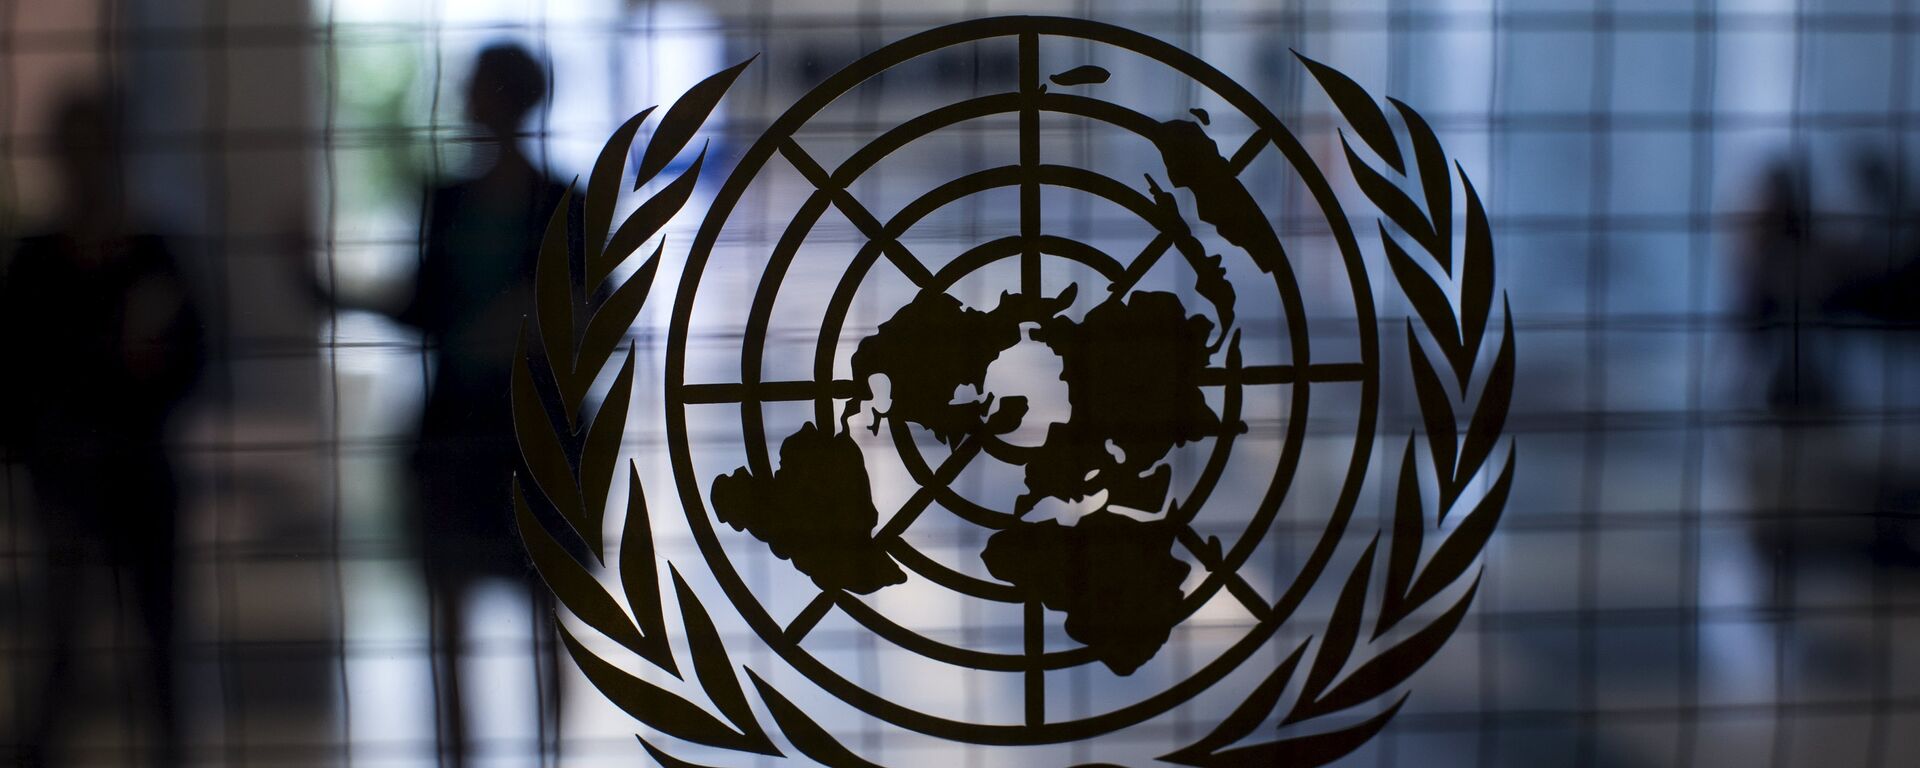 Logo de la ONU - Sputnik Mundo, 1920, 27.08.2021